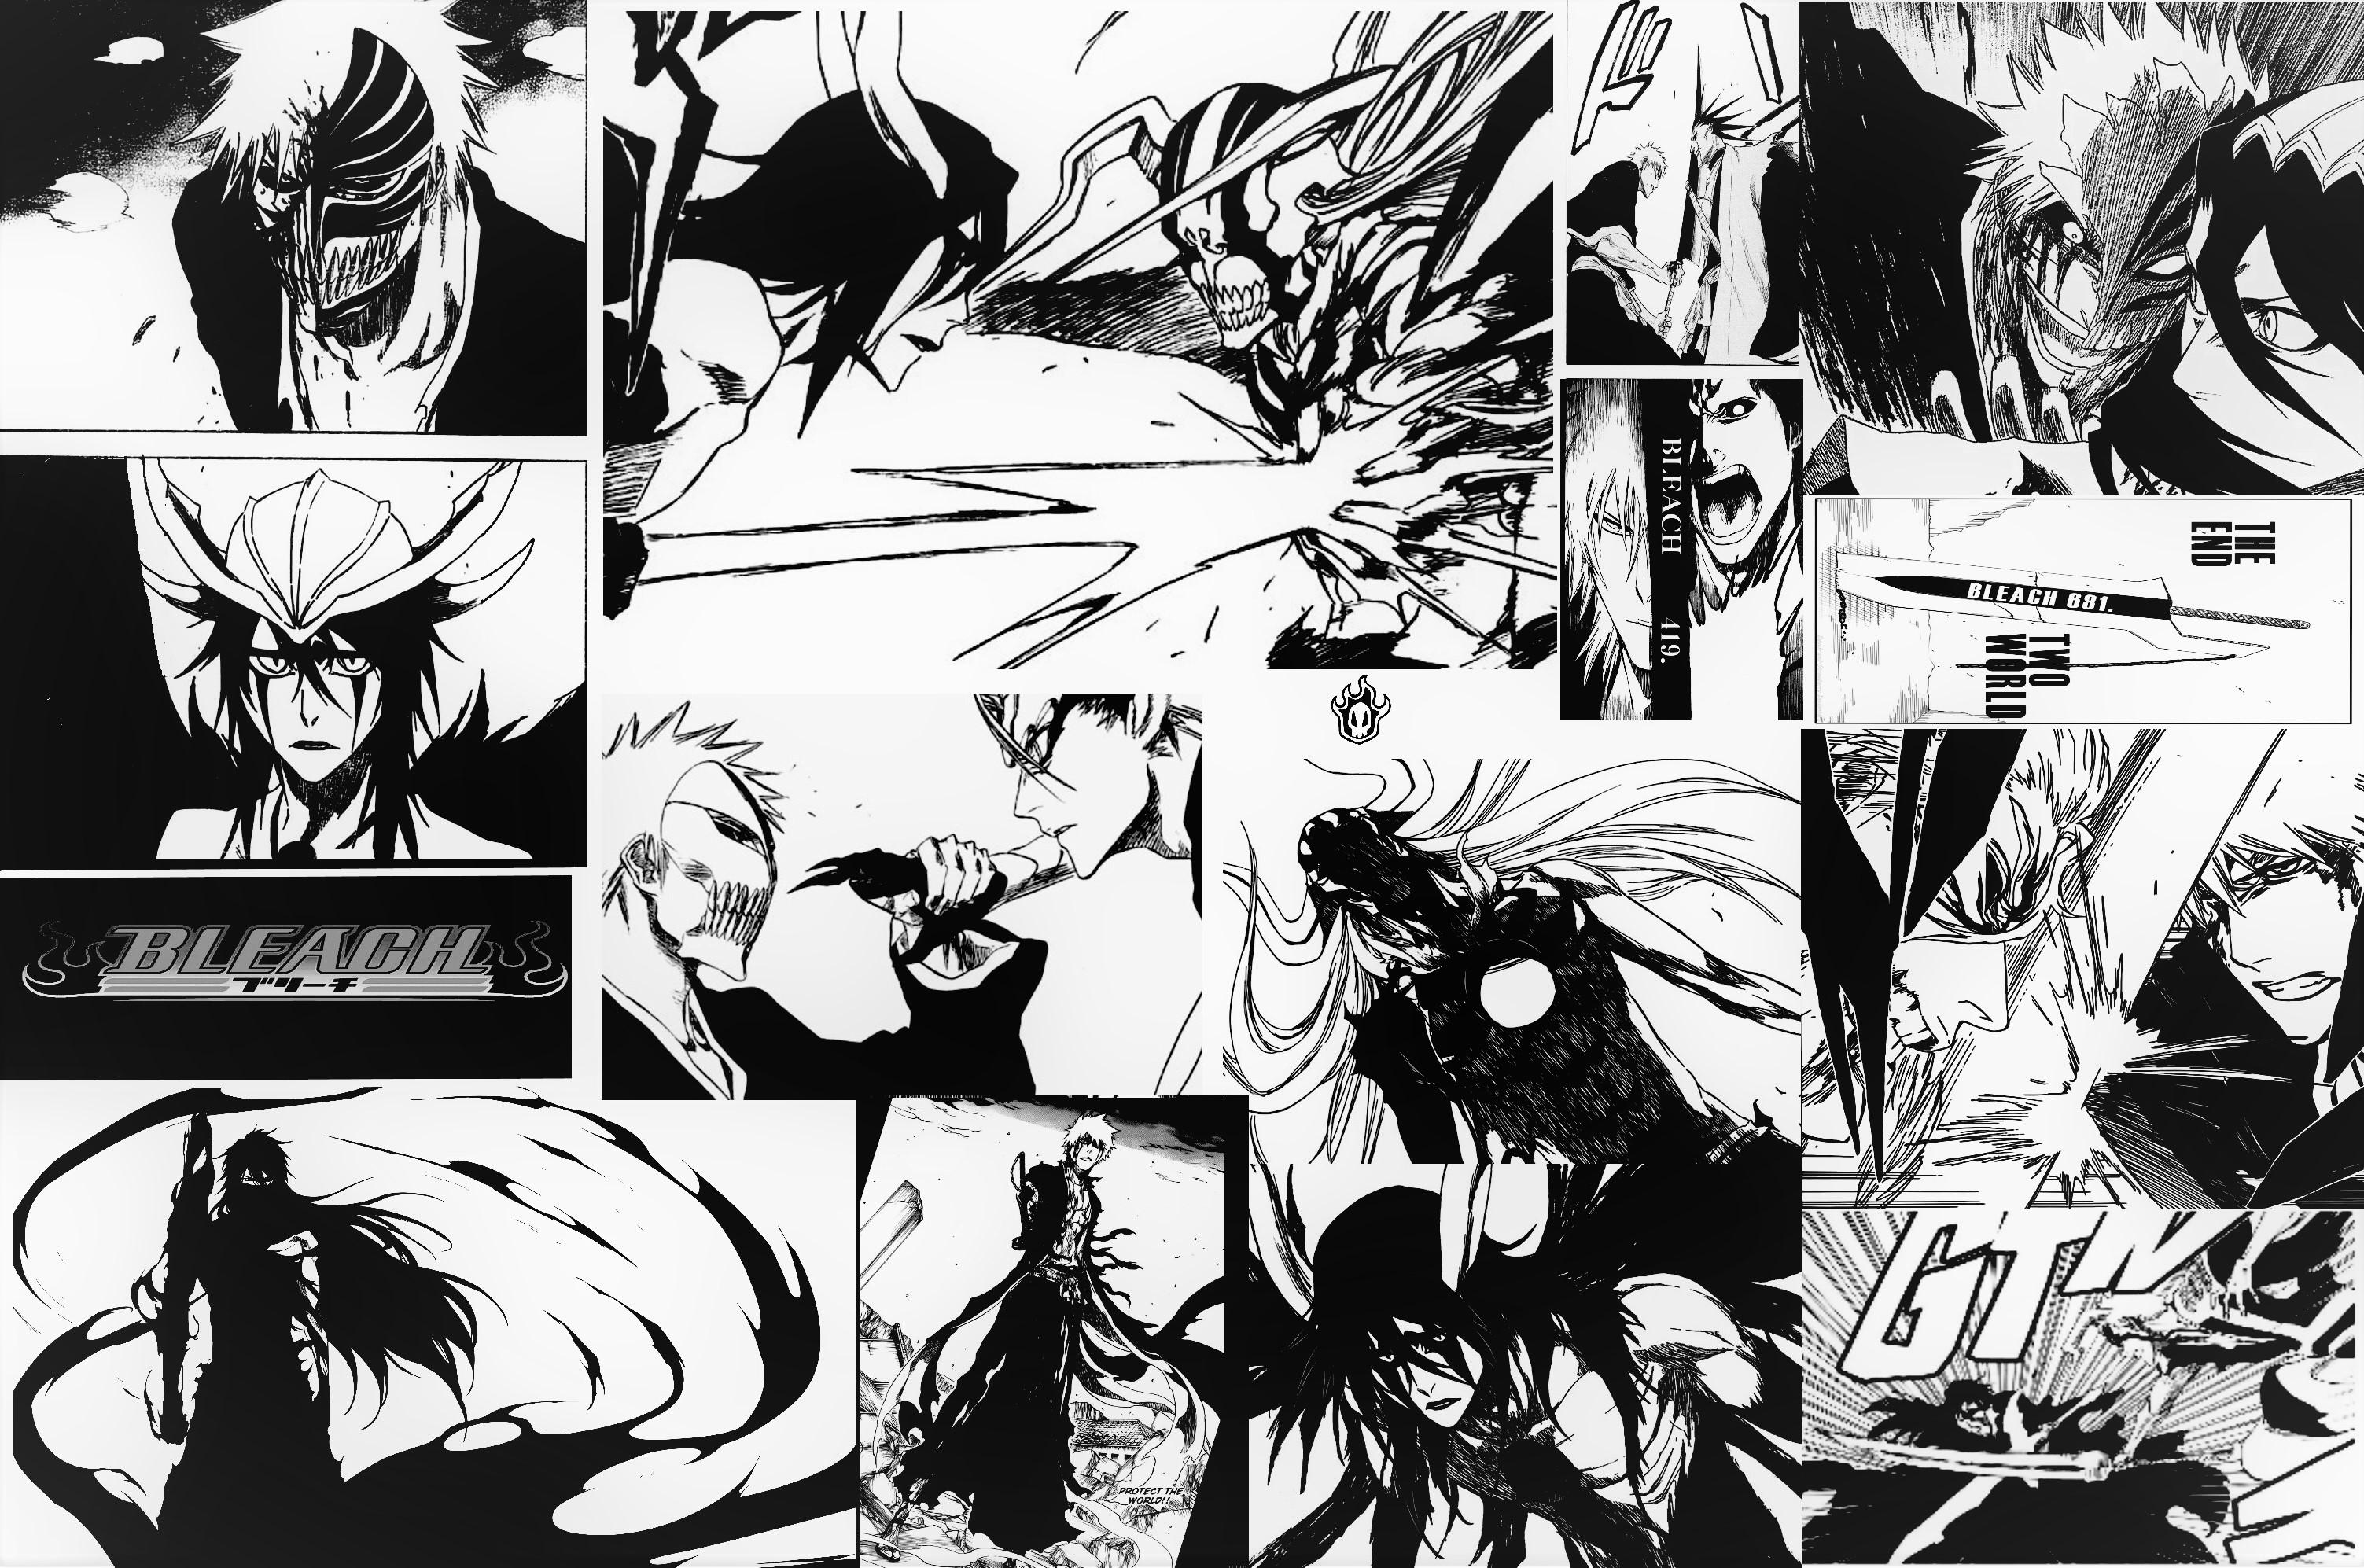 The Full Manga Wallpaper